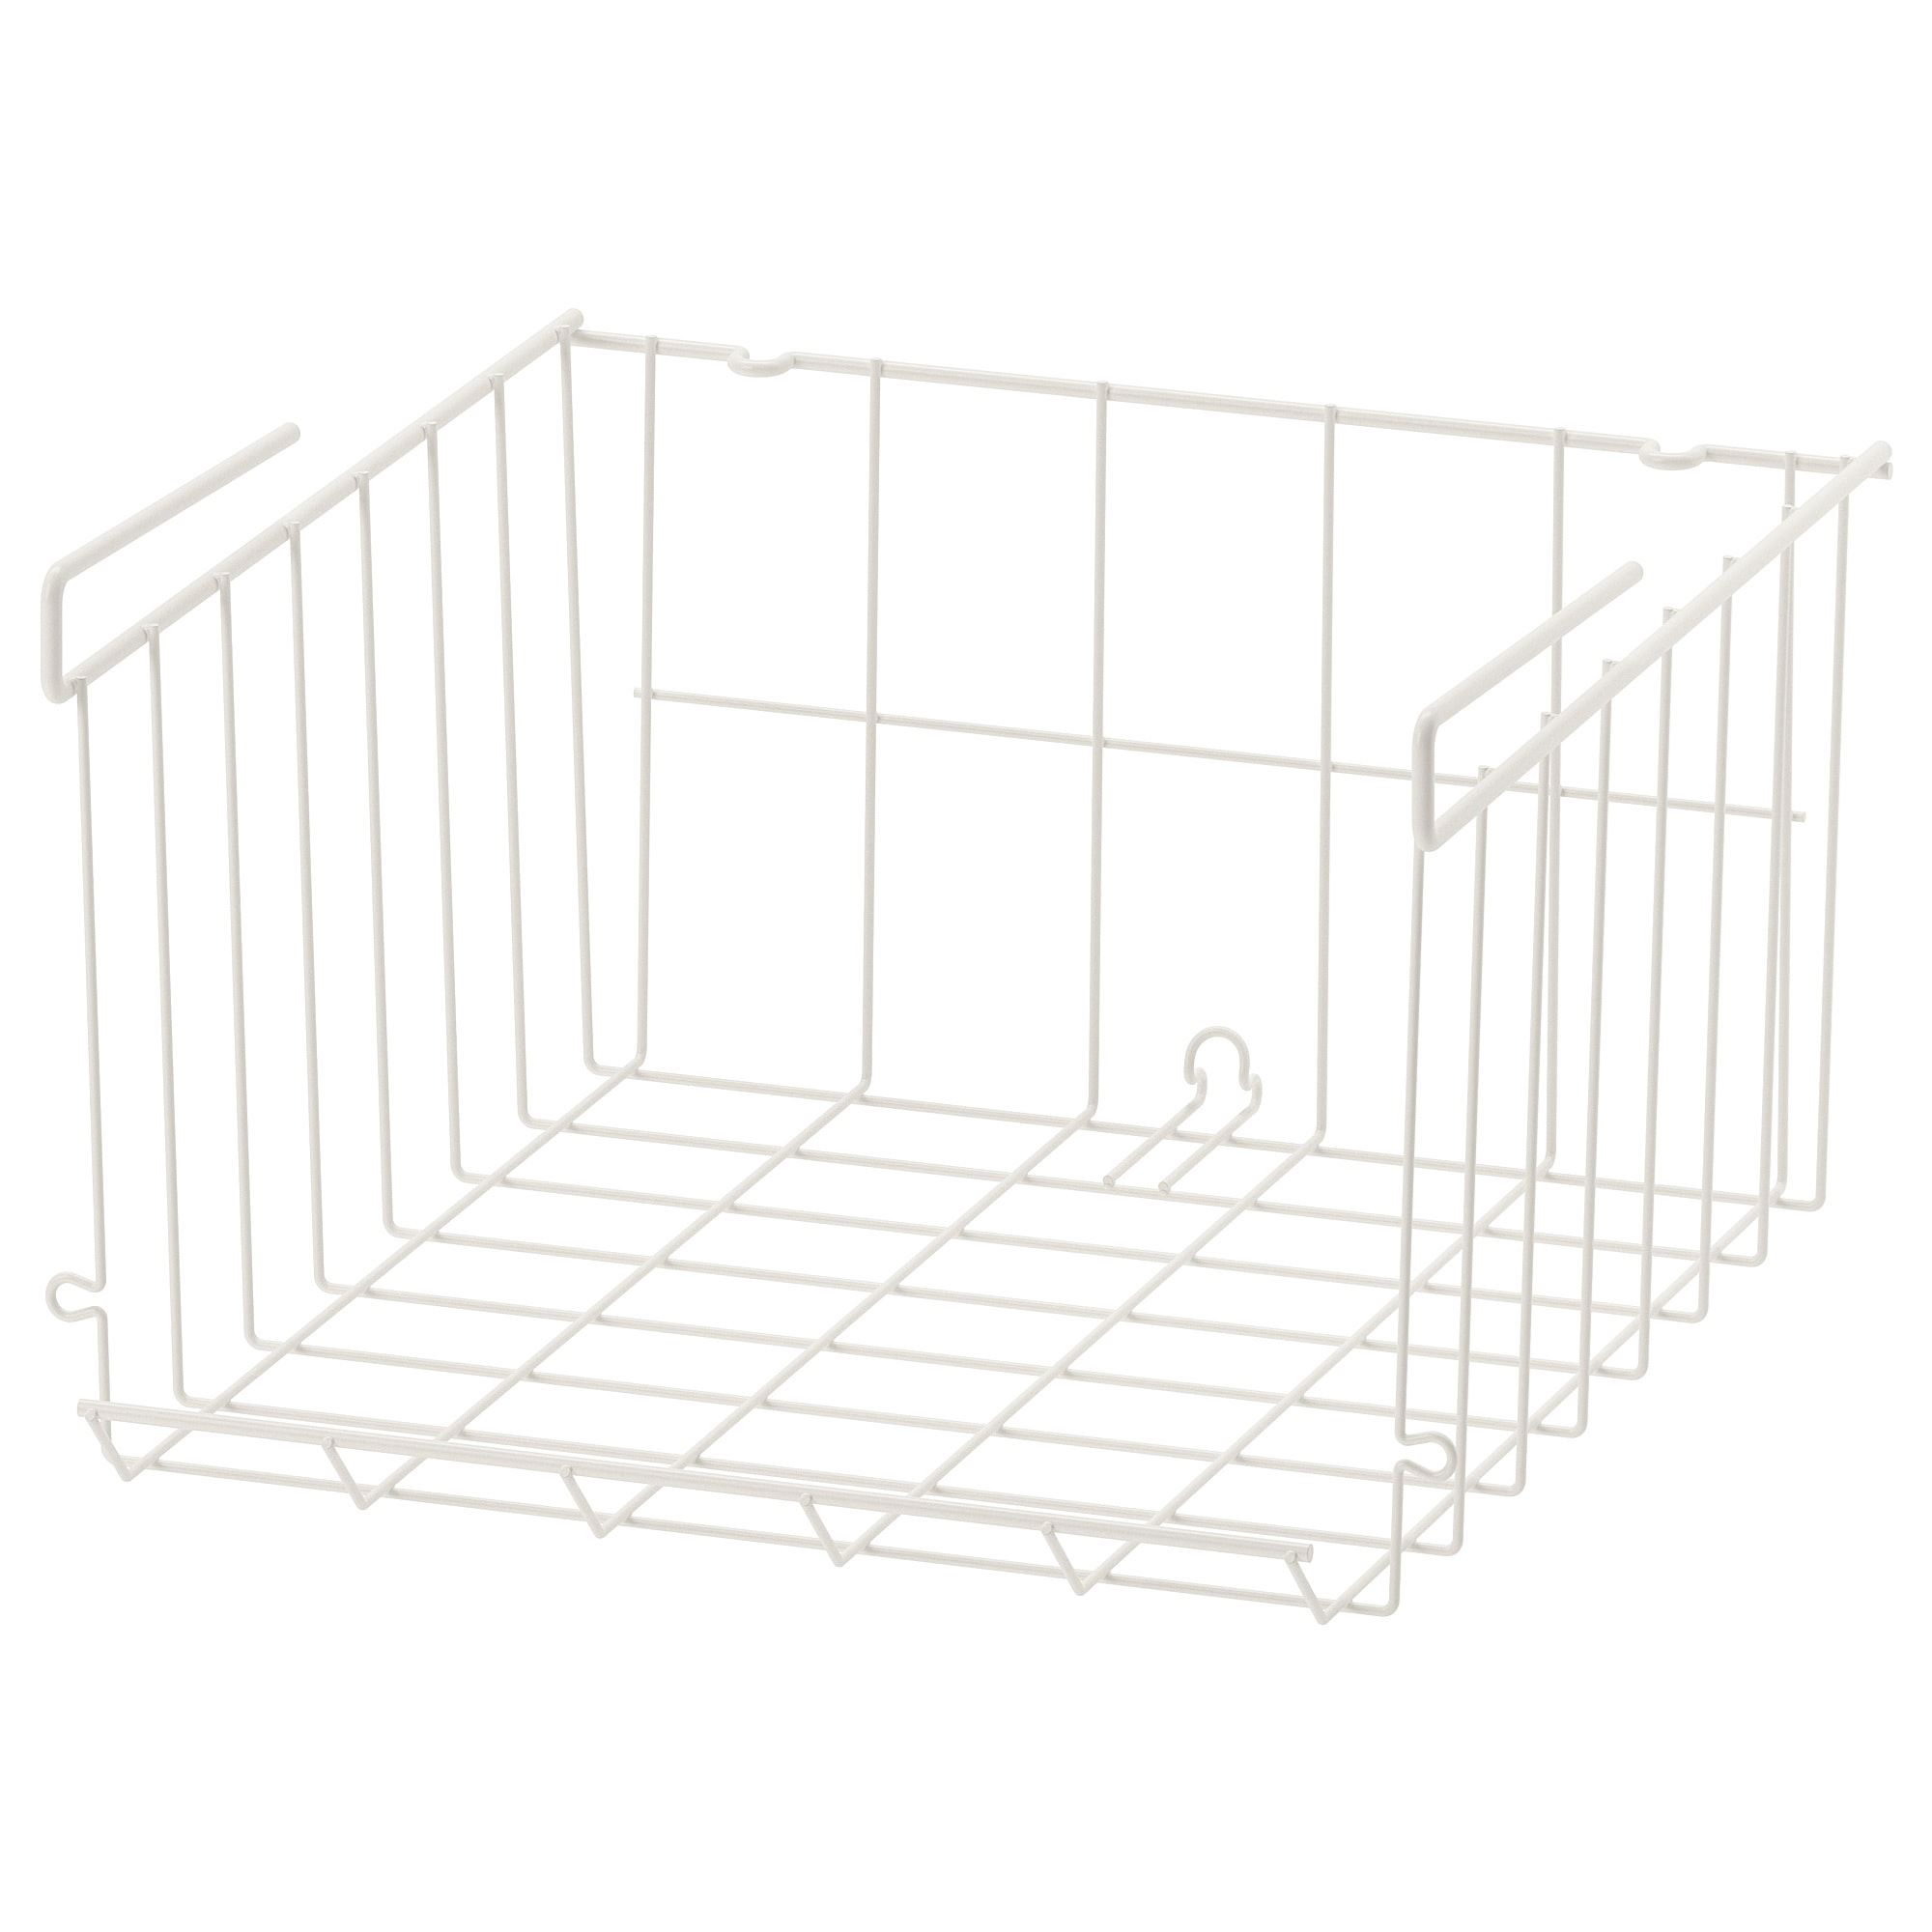 OBSERVATÖR white wire basket | IKEA